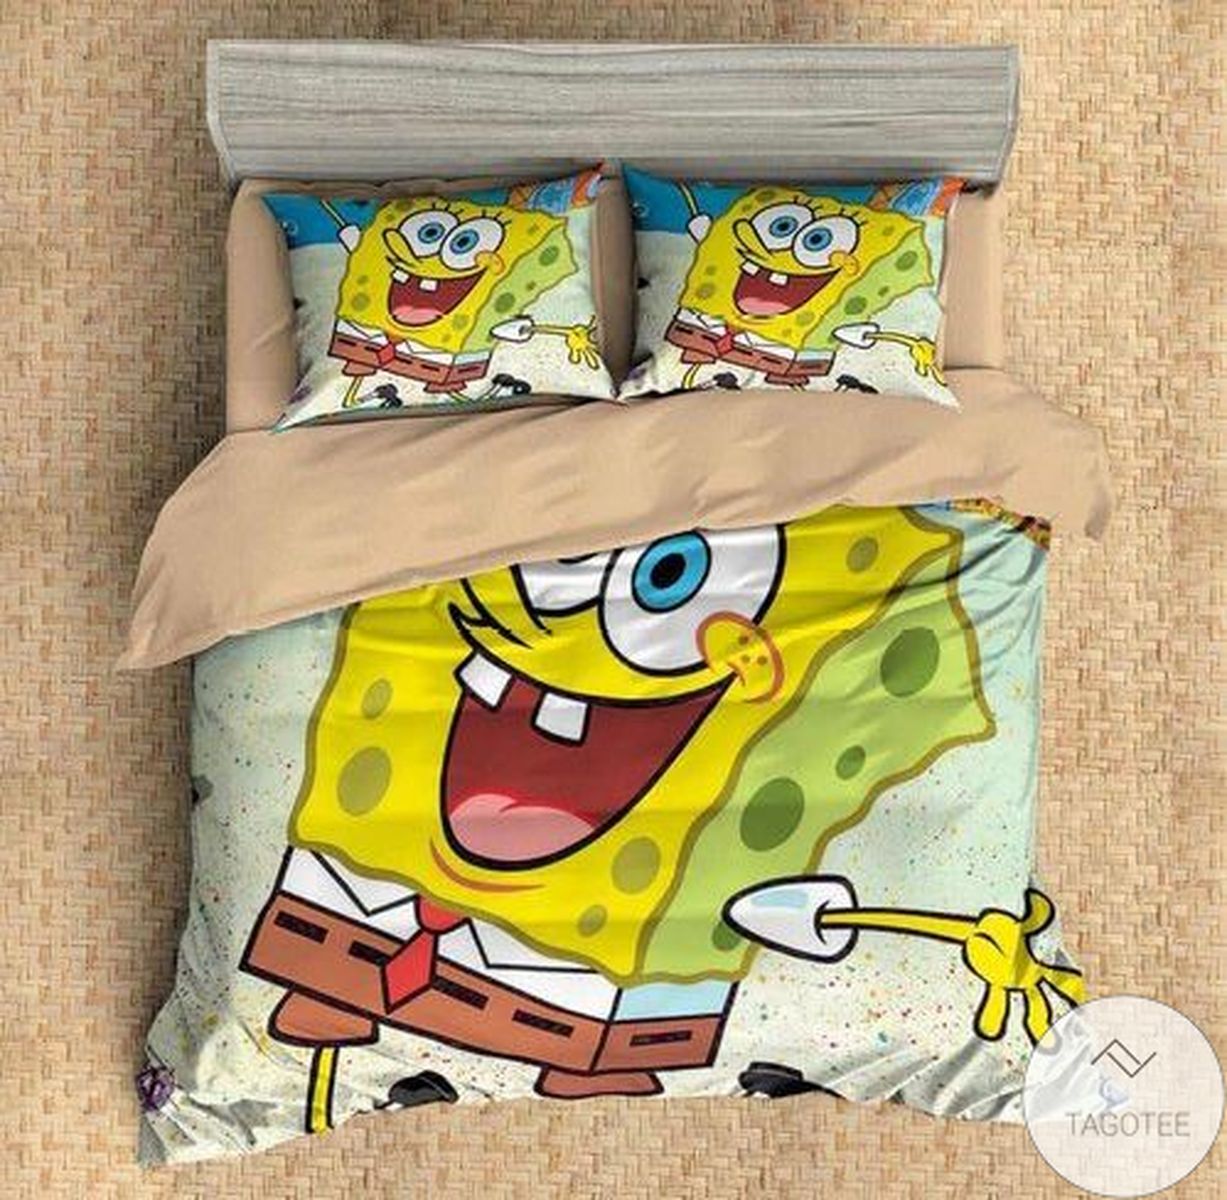 Spongebob Squarepants Bedding Set